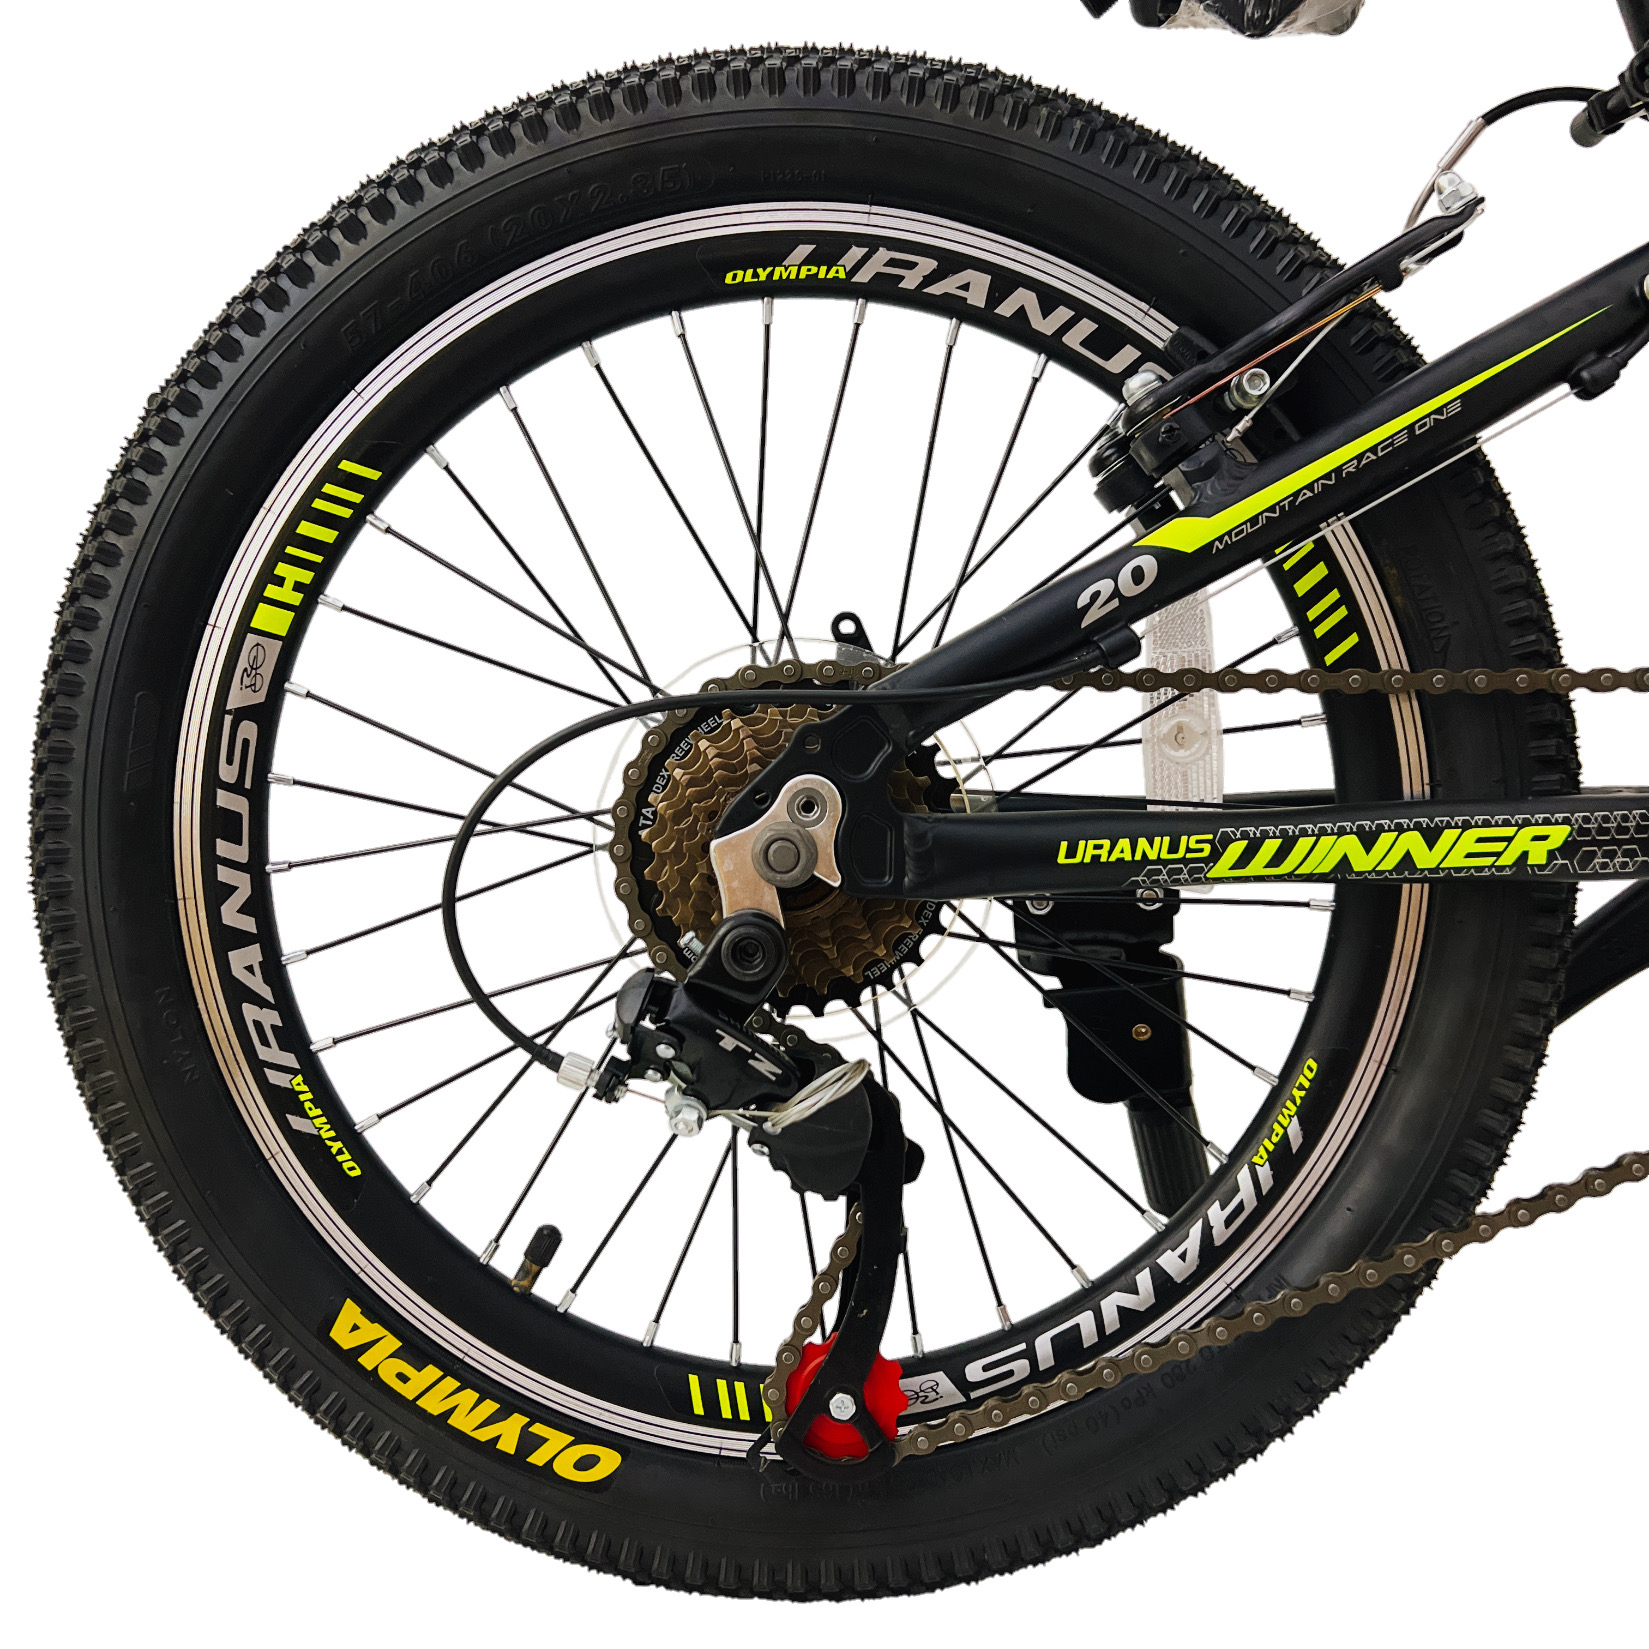 دوچرخه کوهستان المپیا مدل WINNER کد اورانوس سایز طوقه 20